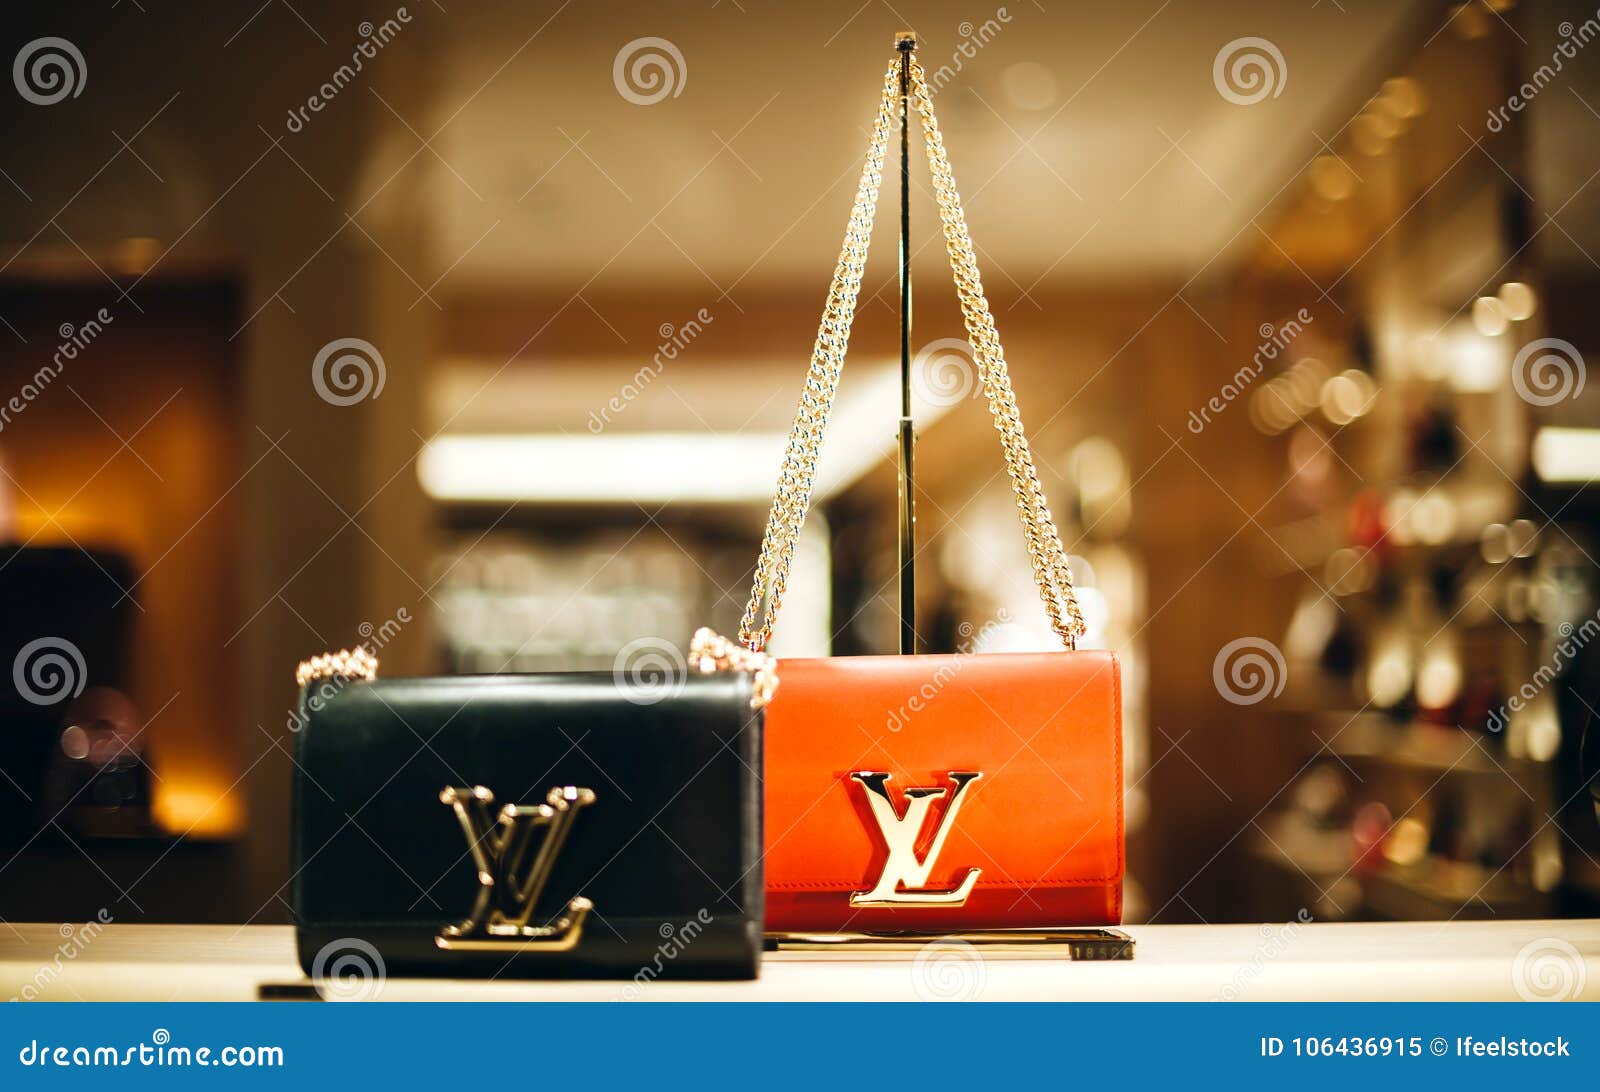 luxury louis vuitton purses